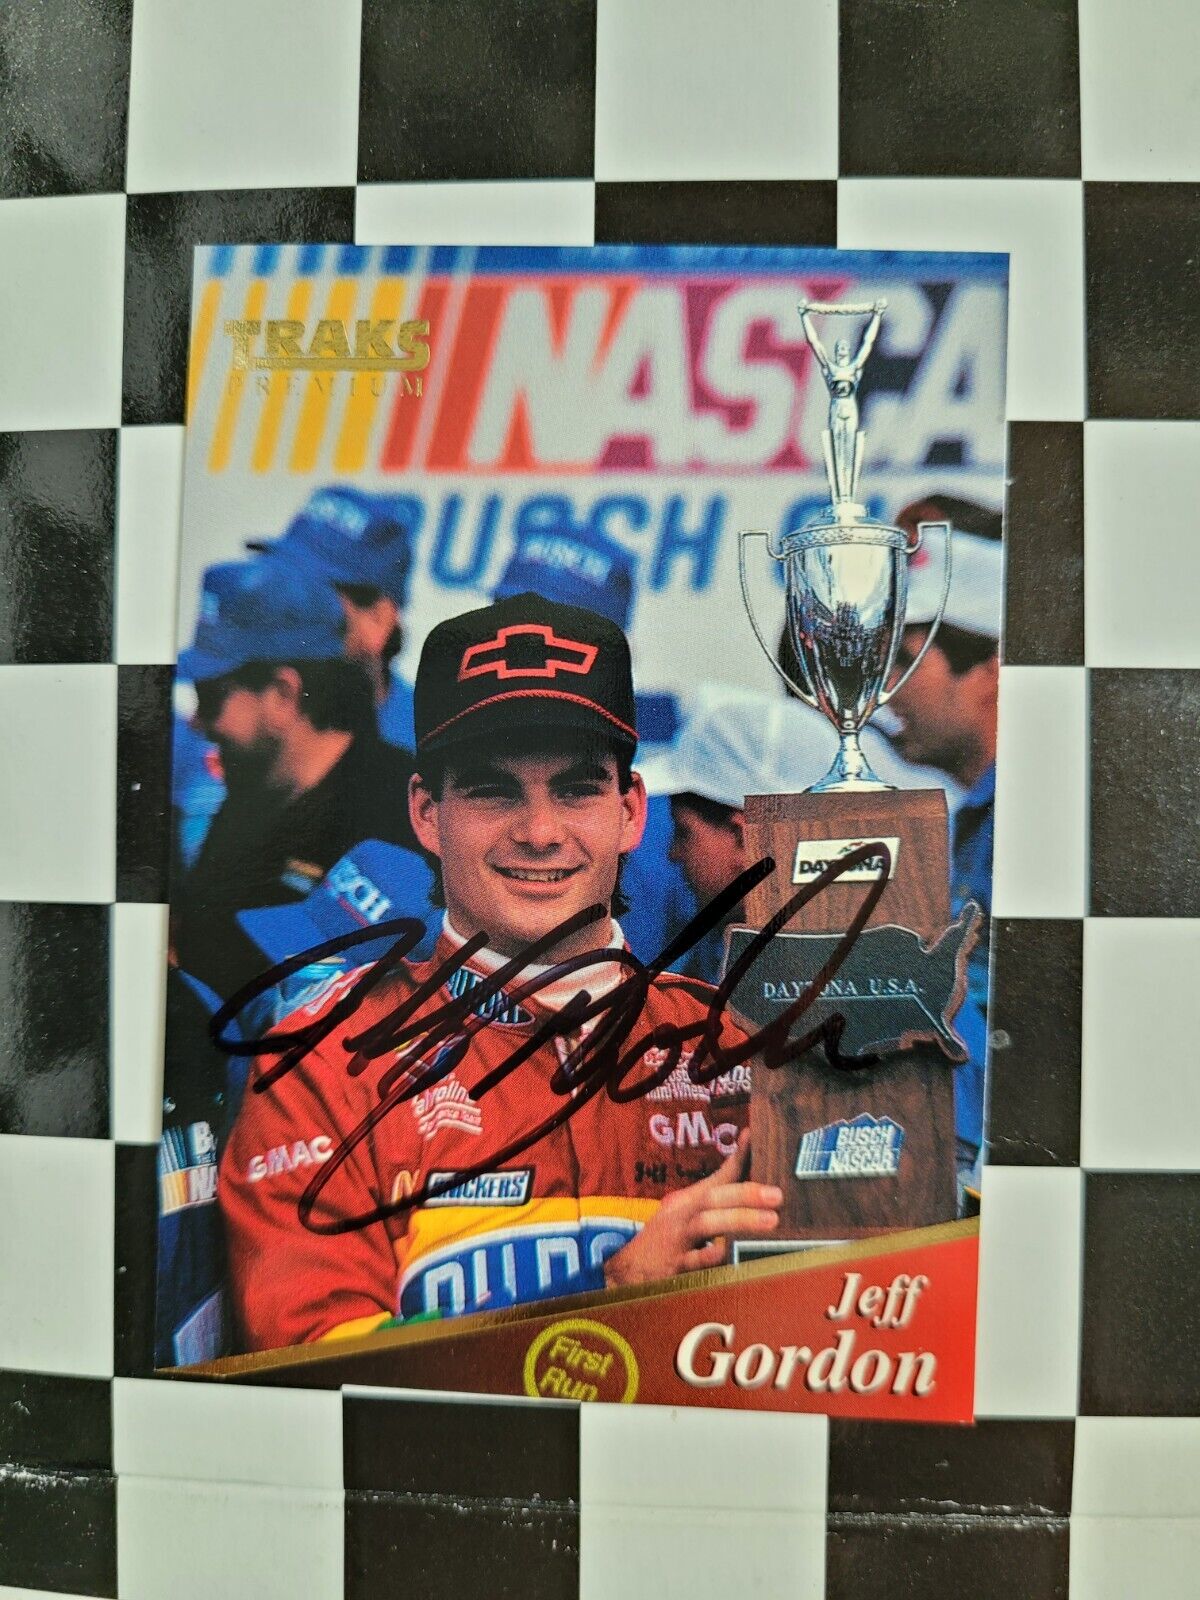 🏁🏆Jeff Gordon Autographed NASCAR Card🏁🏆